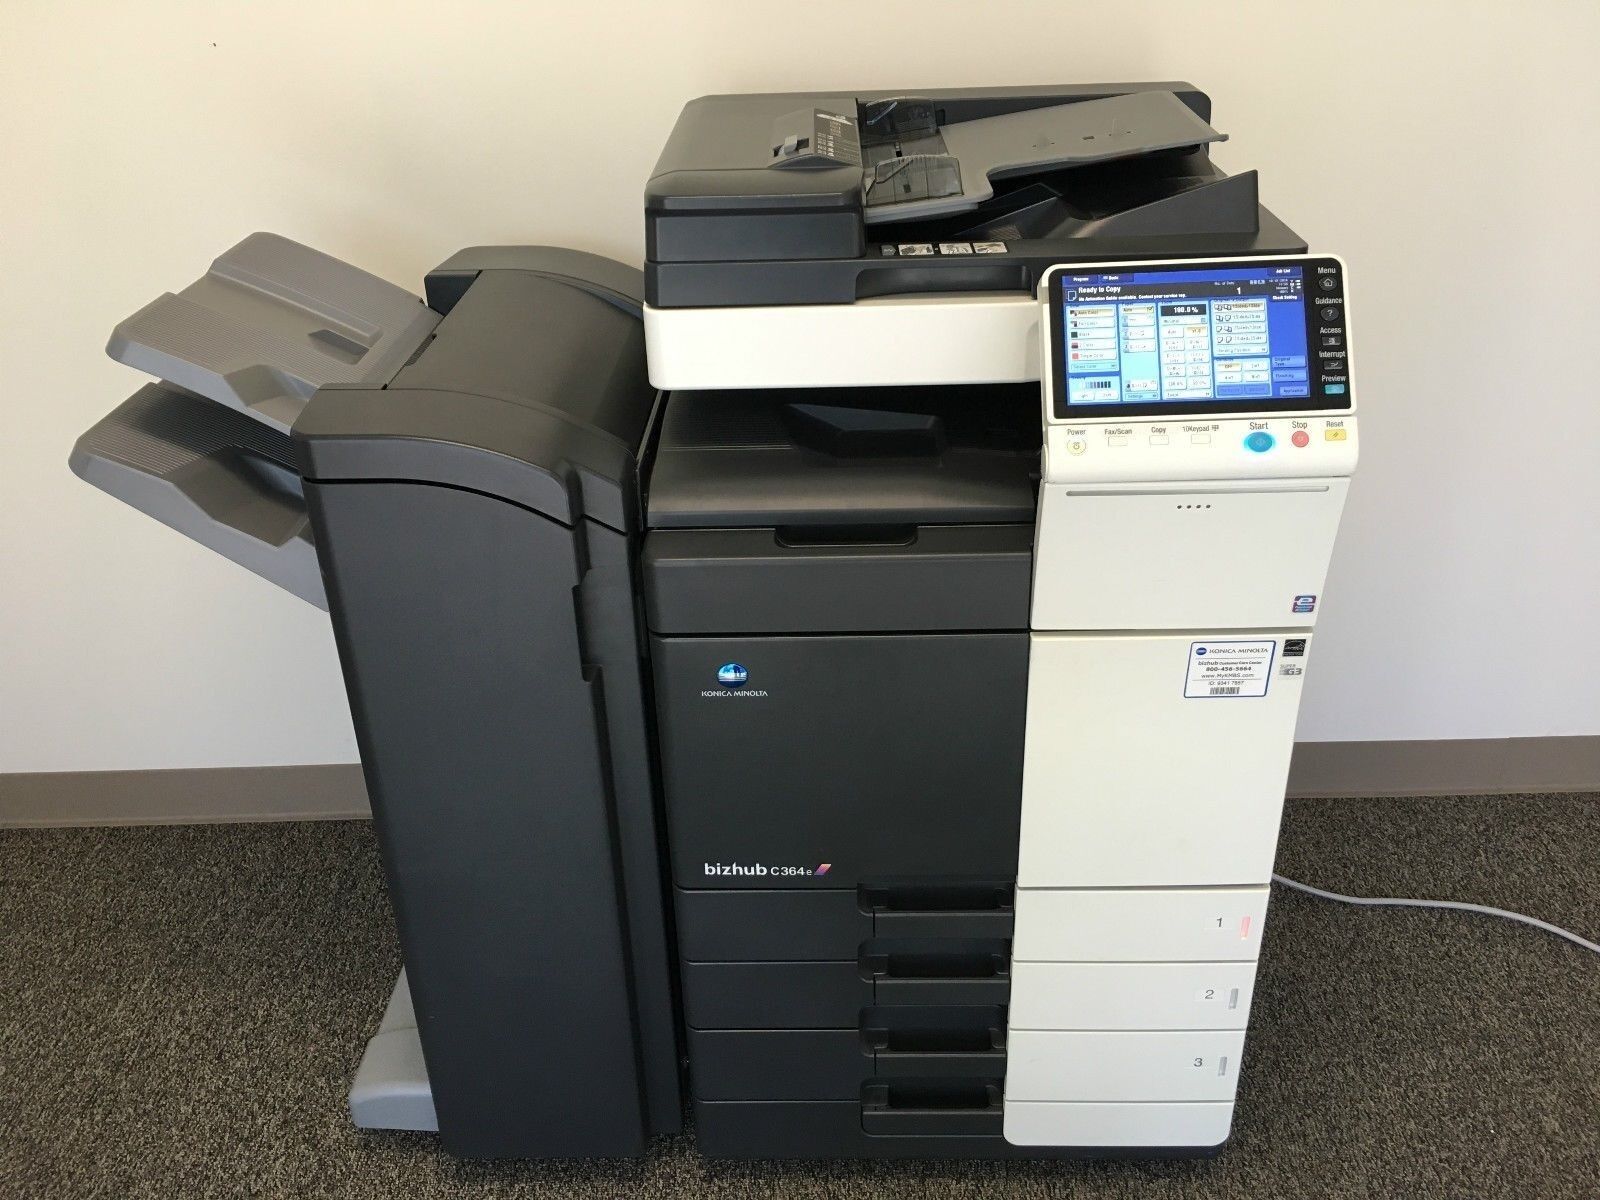 Konica Minolta Bizhub C364e Color Copier Printer Scanner Fax LOW 196k total pgs